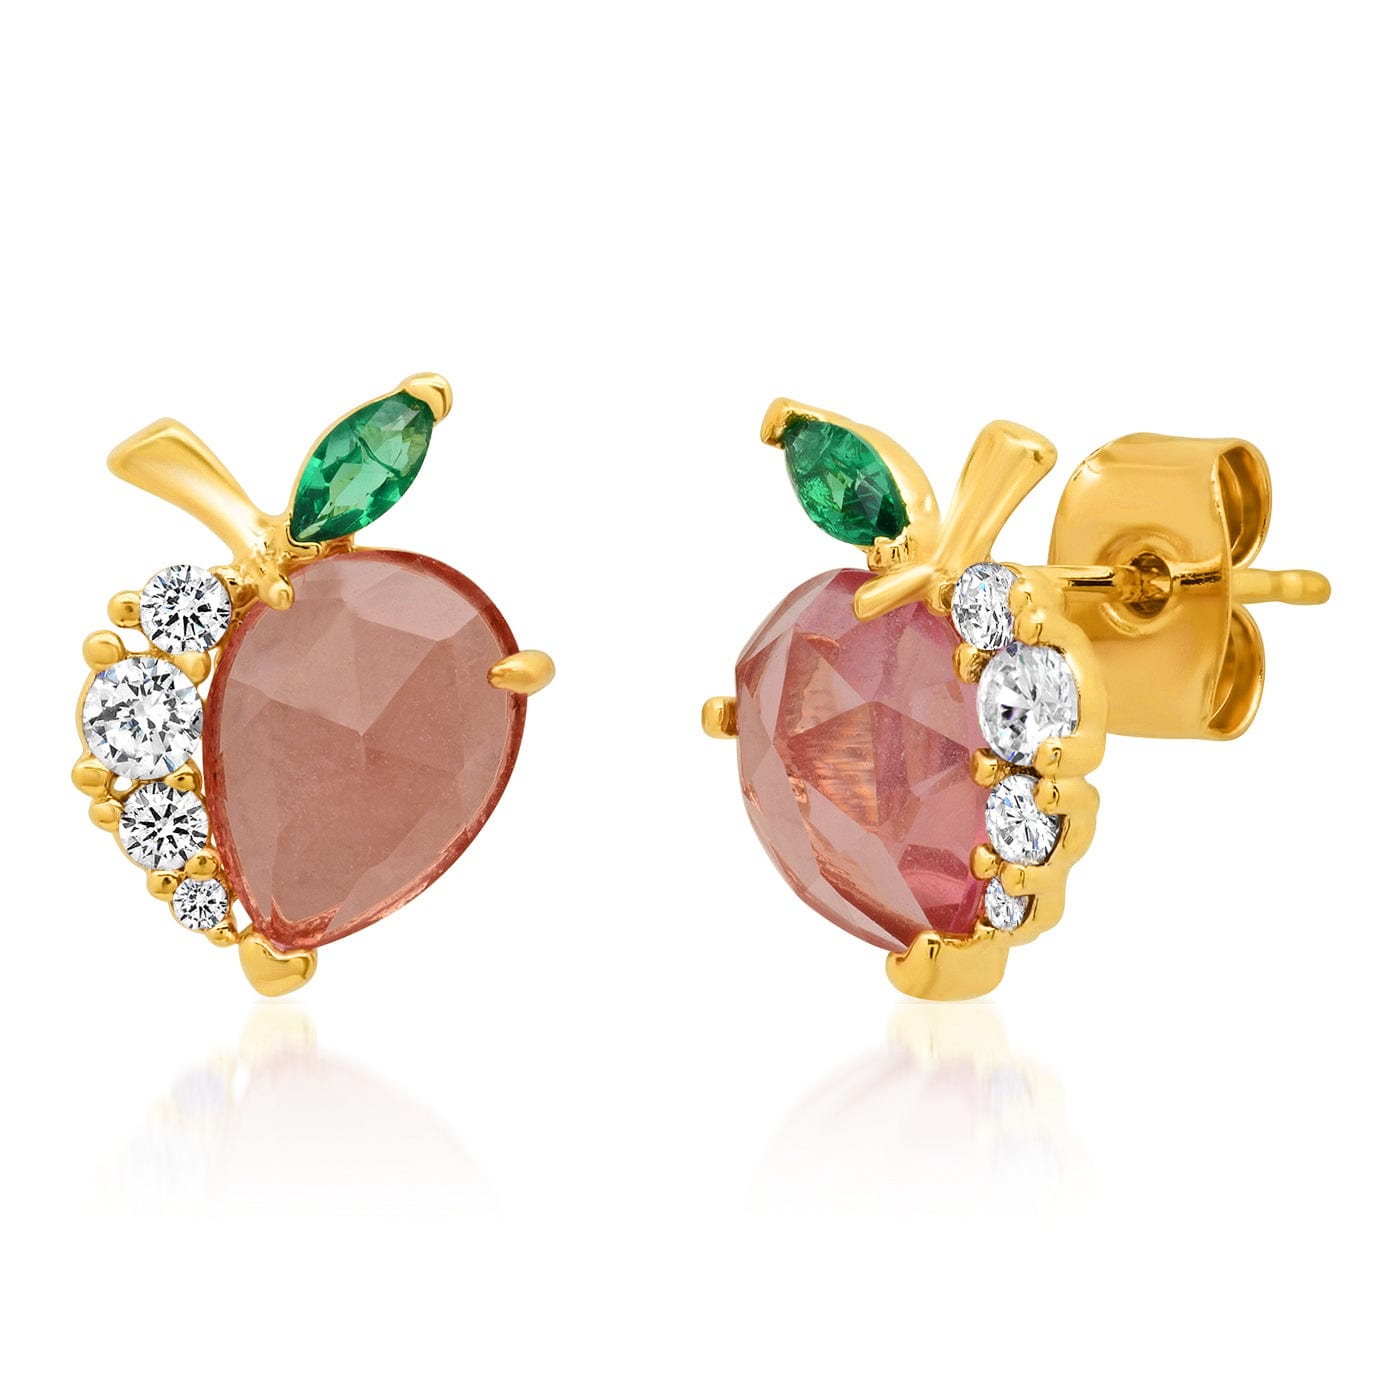 TAI JEWELRY Earrings Glass Peach Studs